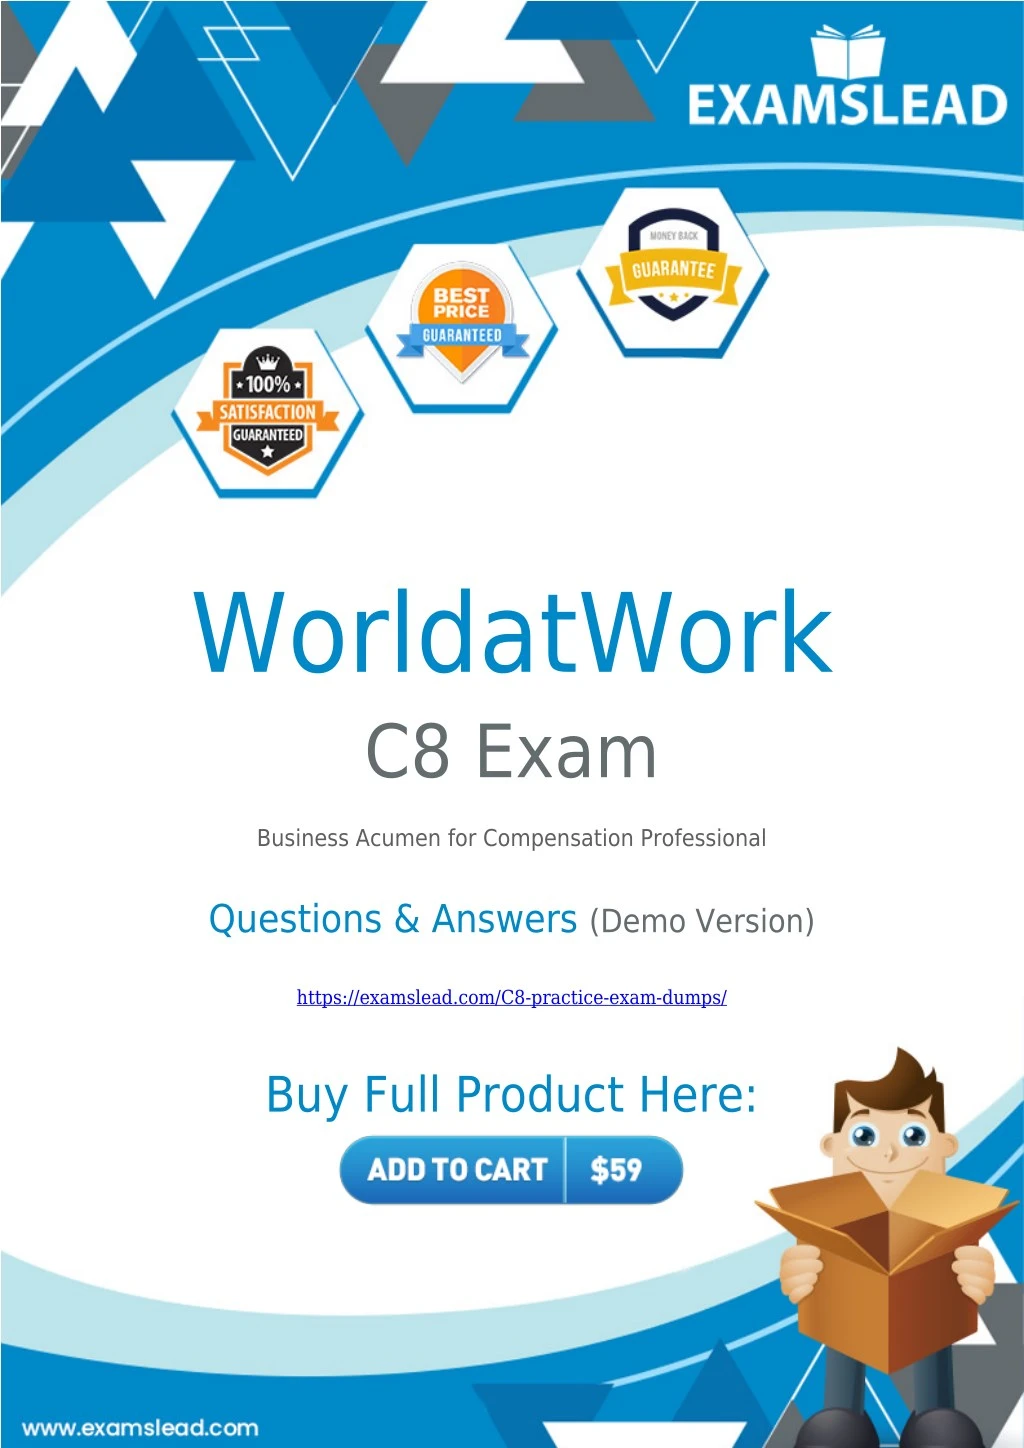 worldatwork c8 exam